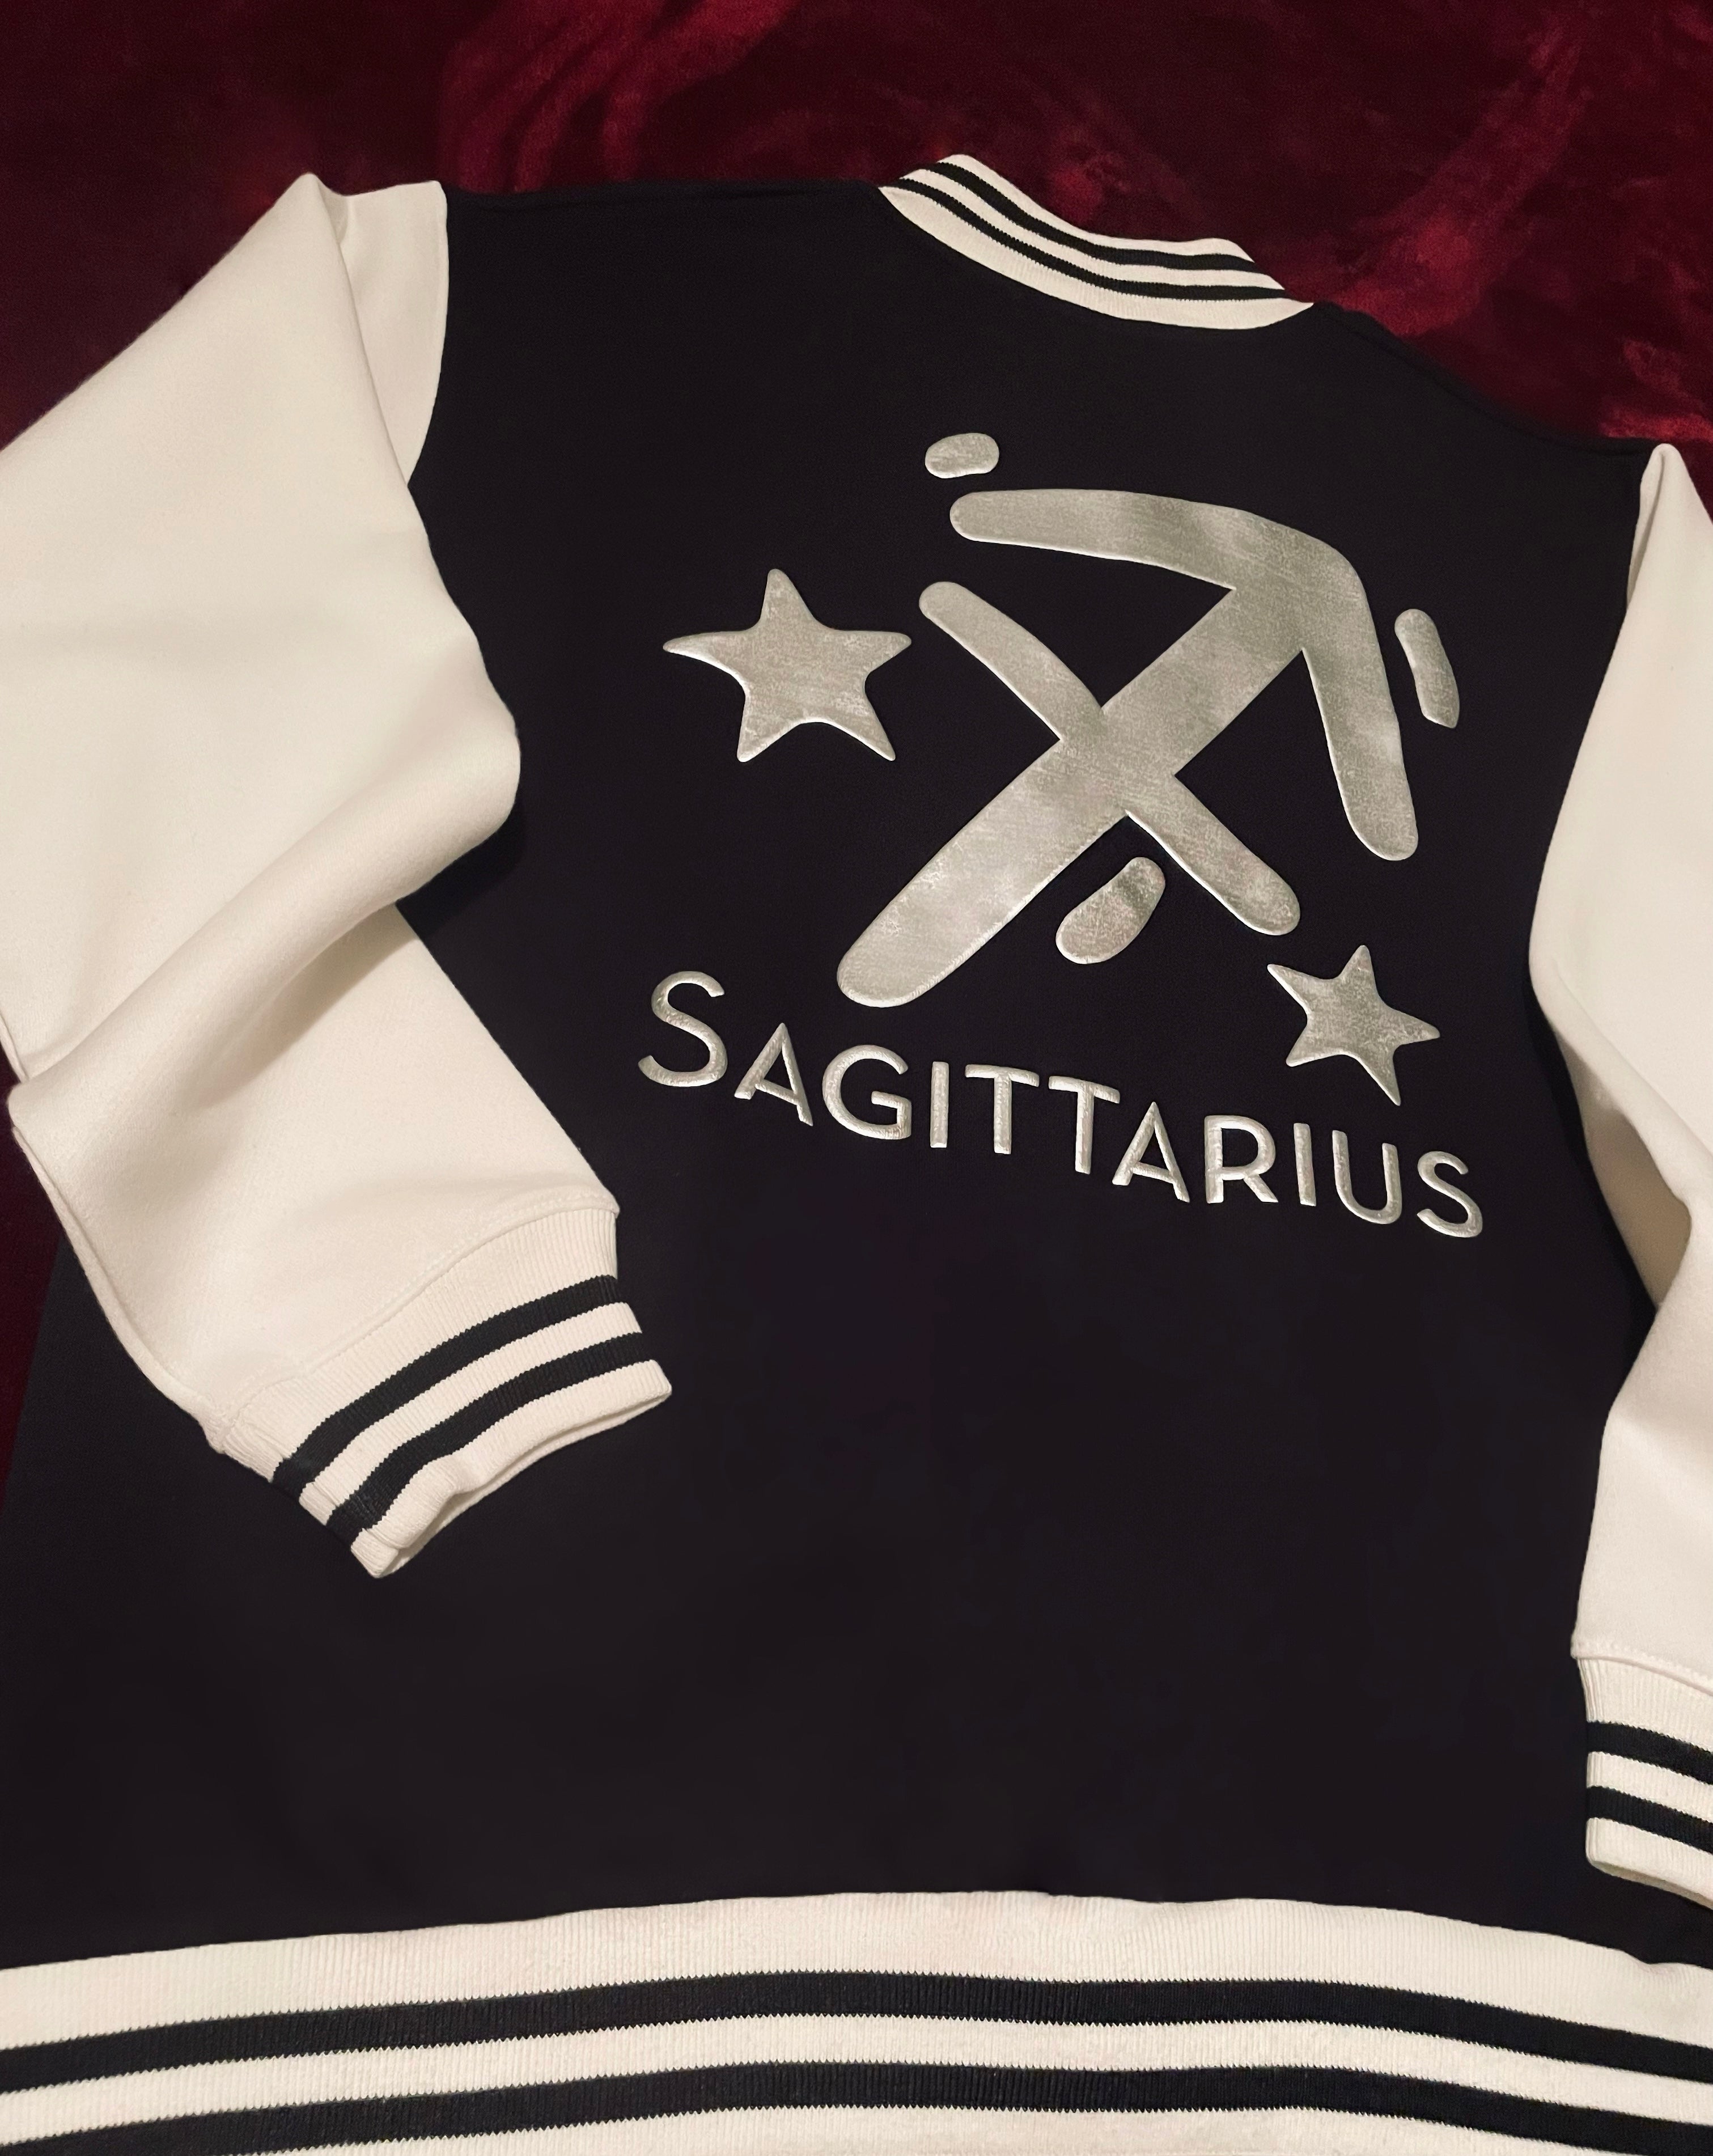 Fallon Aurielle Unisex Signature Sagittarius Logo & Name Zodiac Jacket Jogging Set (Black, Metallic Silver & Cream)